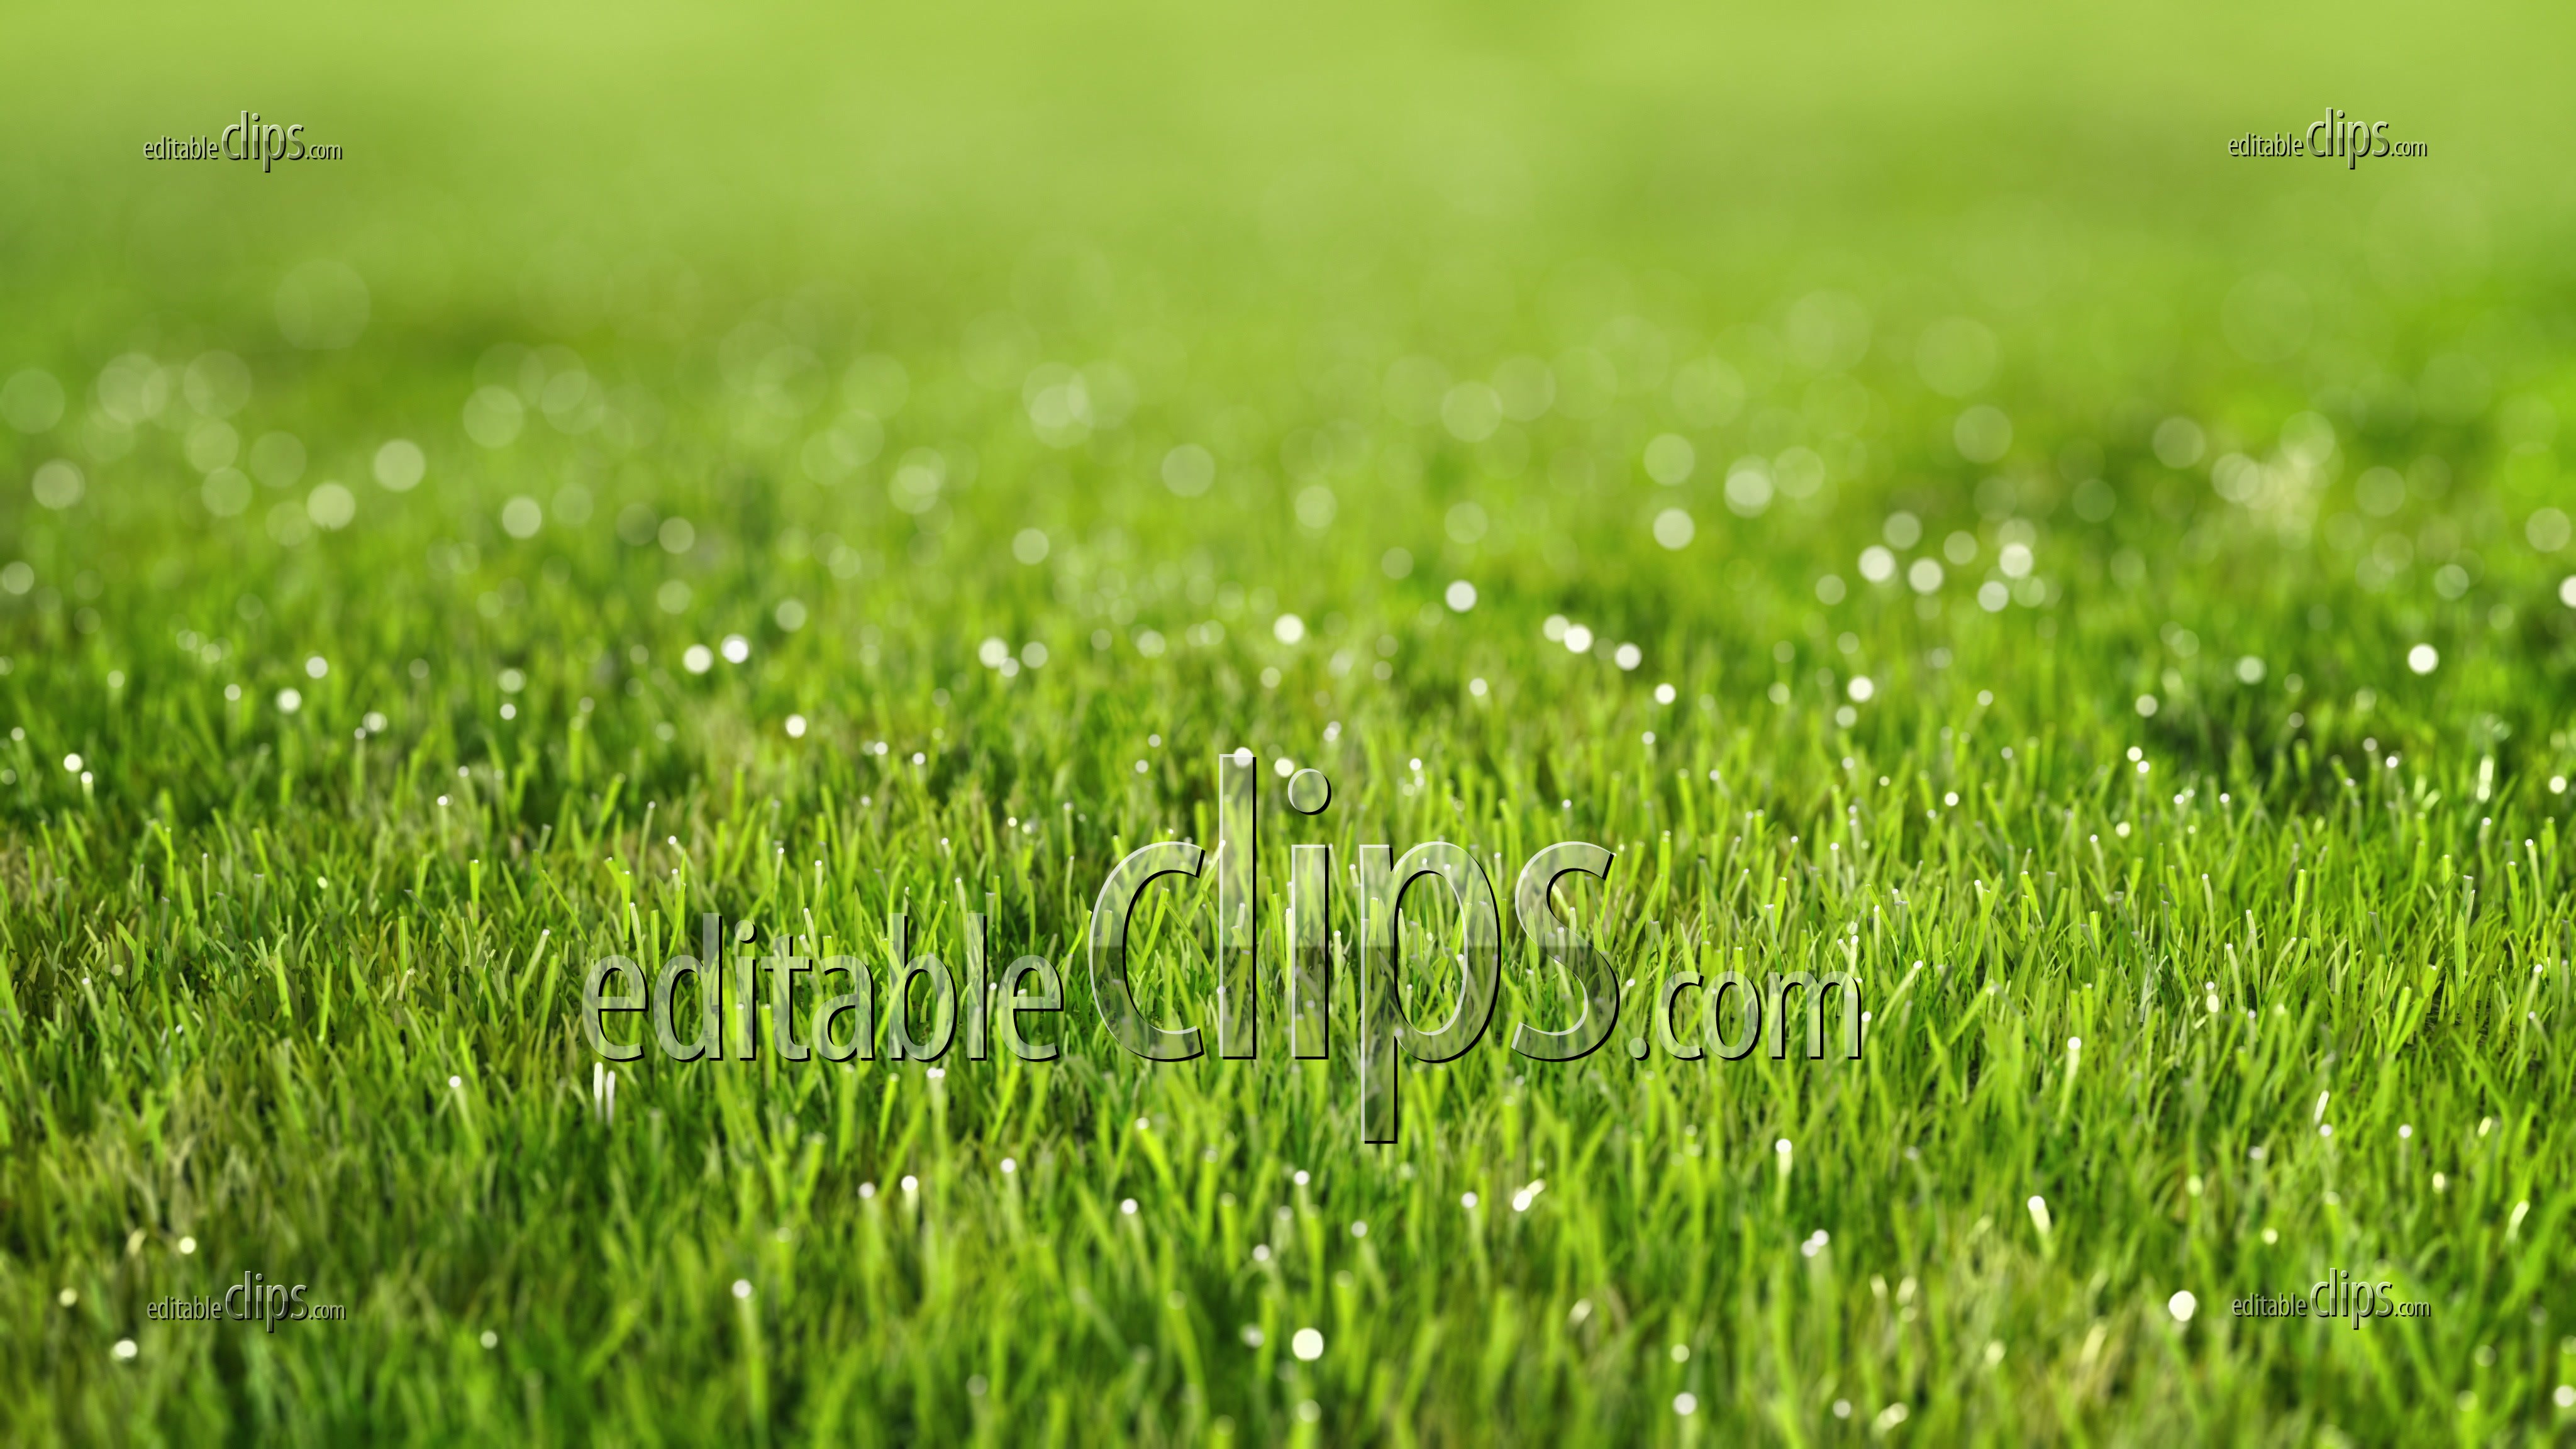 Perfect green lawn. Sward, 4k - Editable Clips